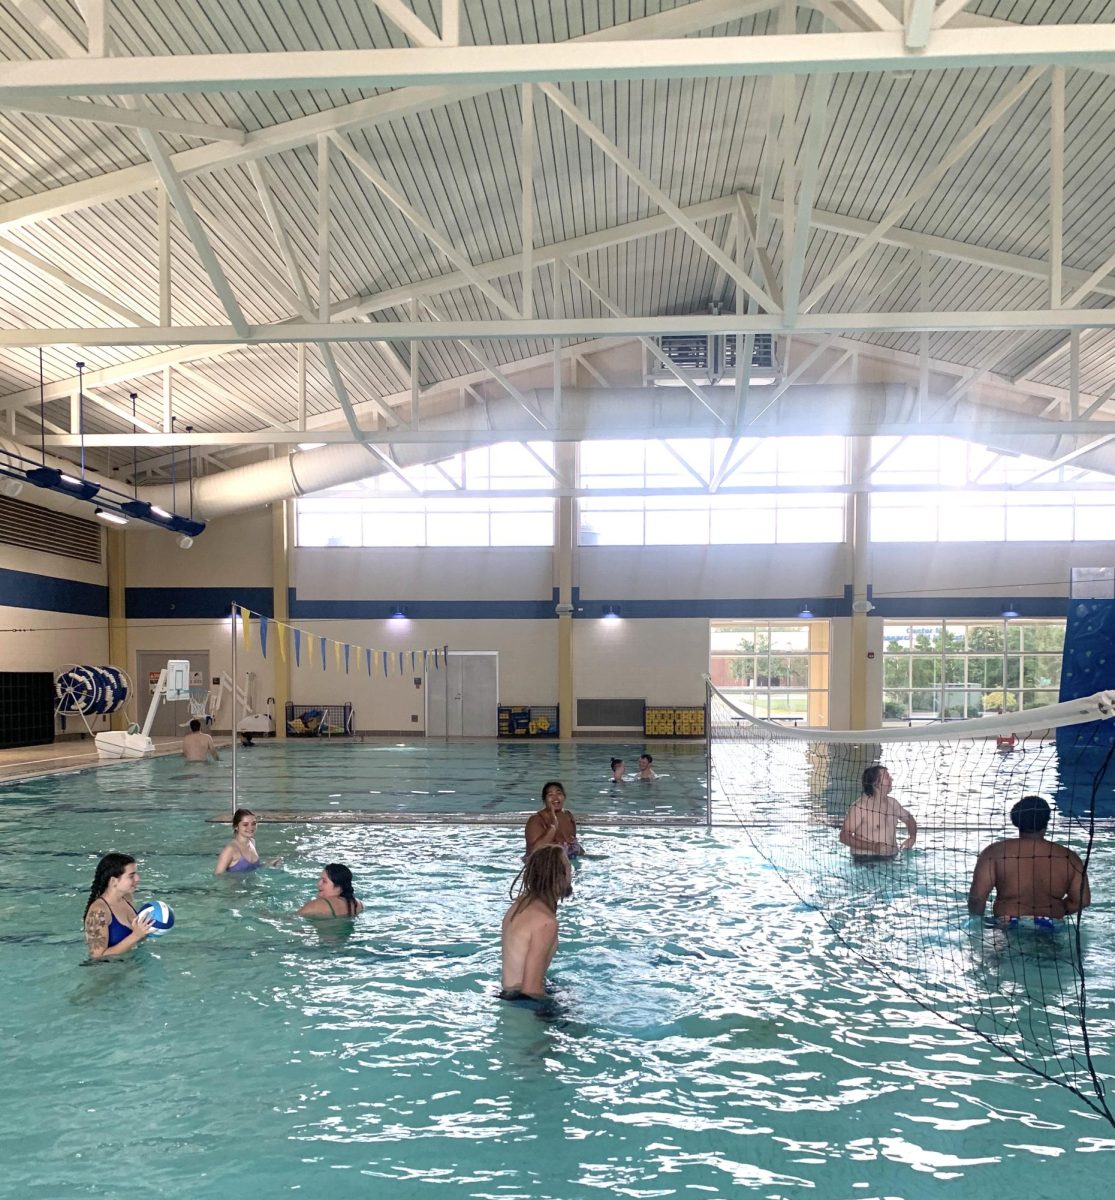 Students enjoy a bit of pool time as the indoor pool reopened last week following repairs.